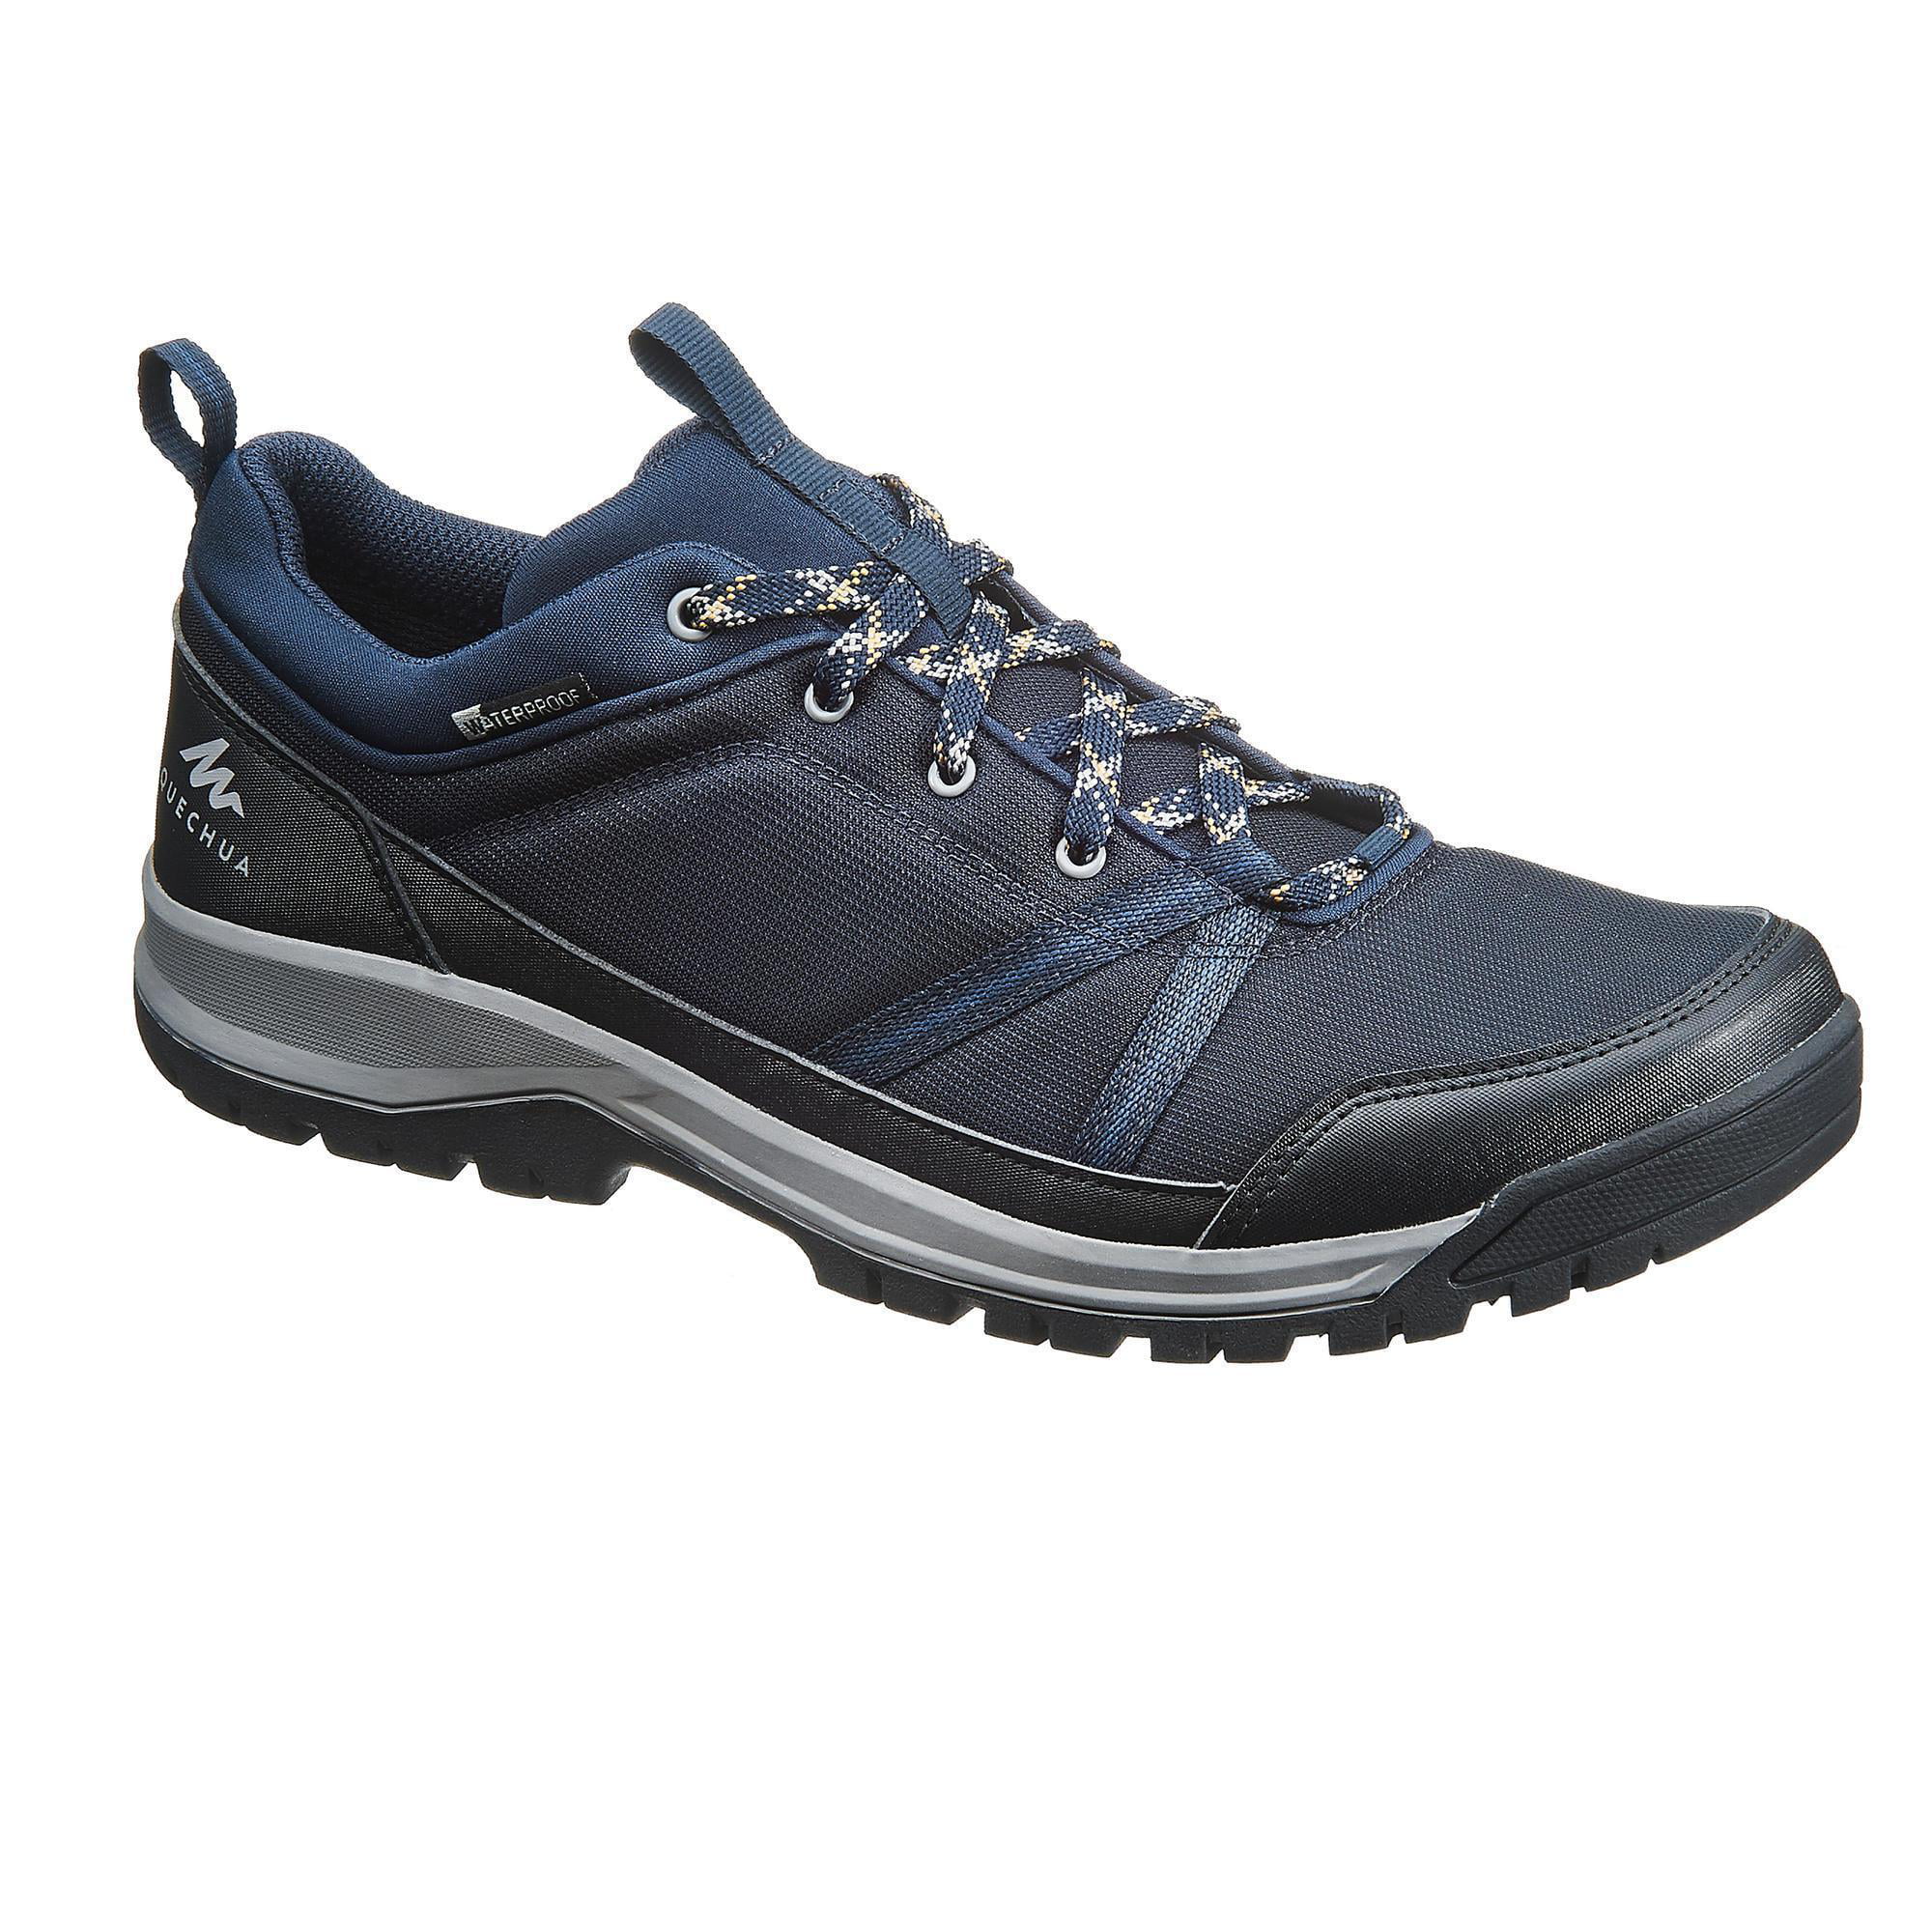 Buy > walmart waterproof hiking shoes > in stock